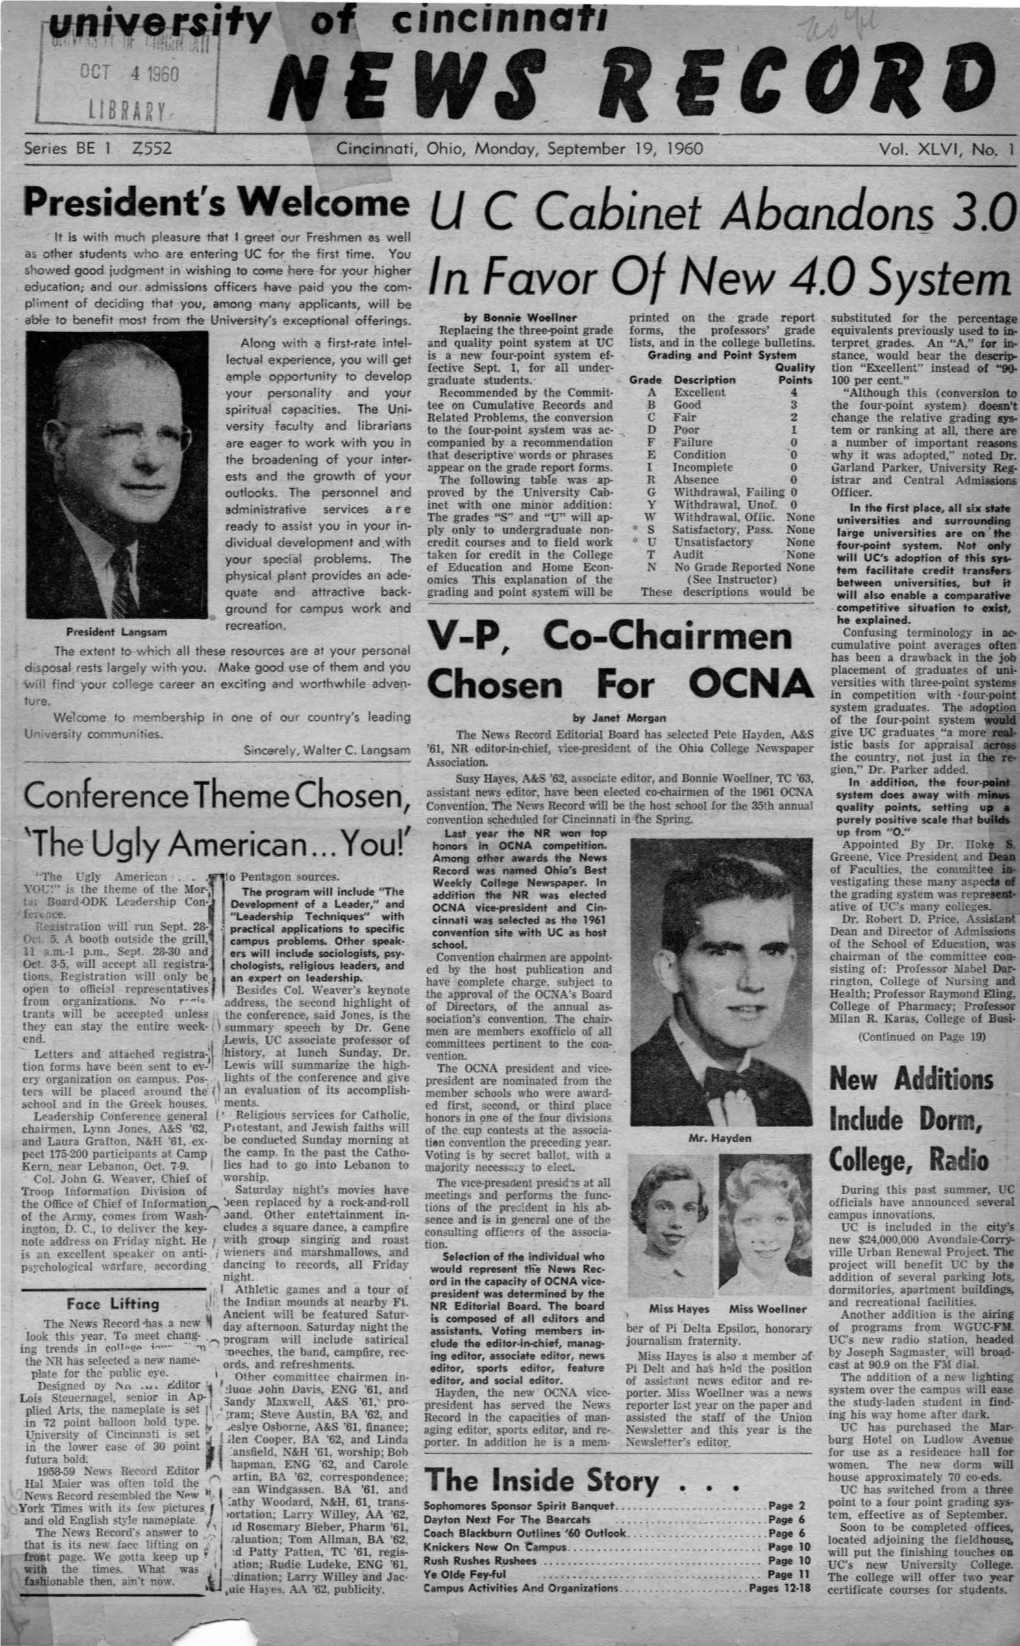 University of Cincinnati News Record. Monday, September 19, 1960. Vol. XLVI, No. 1